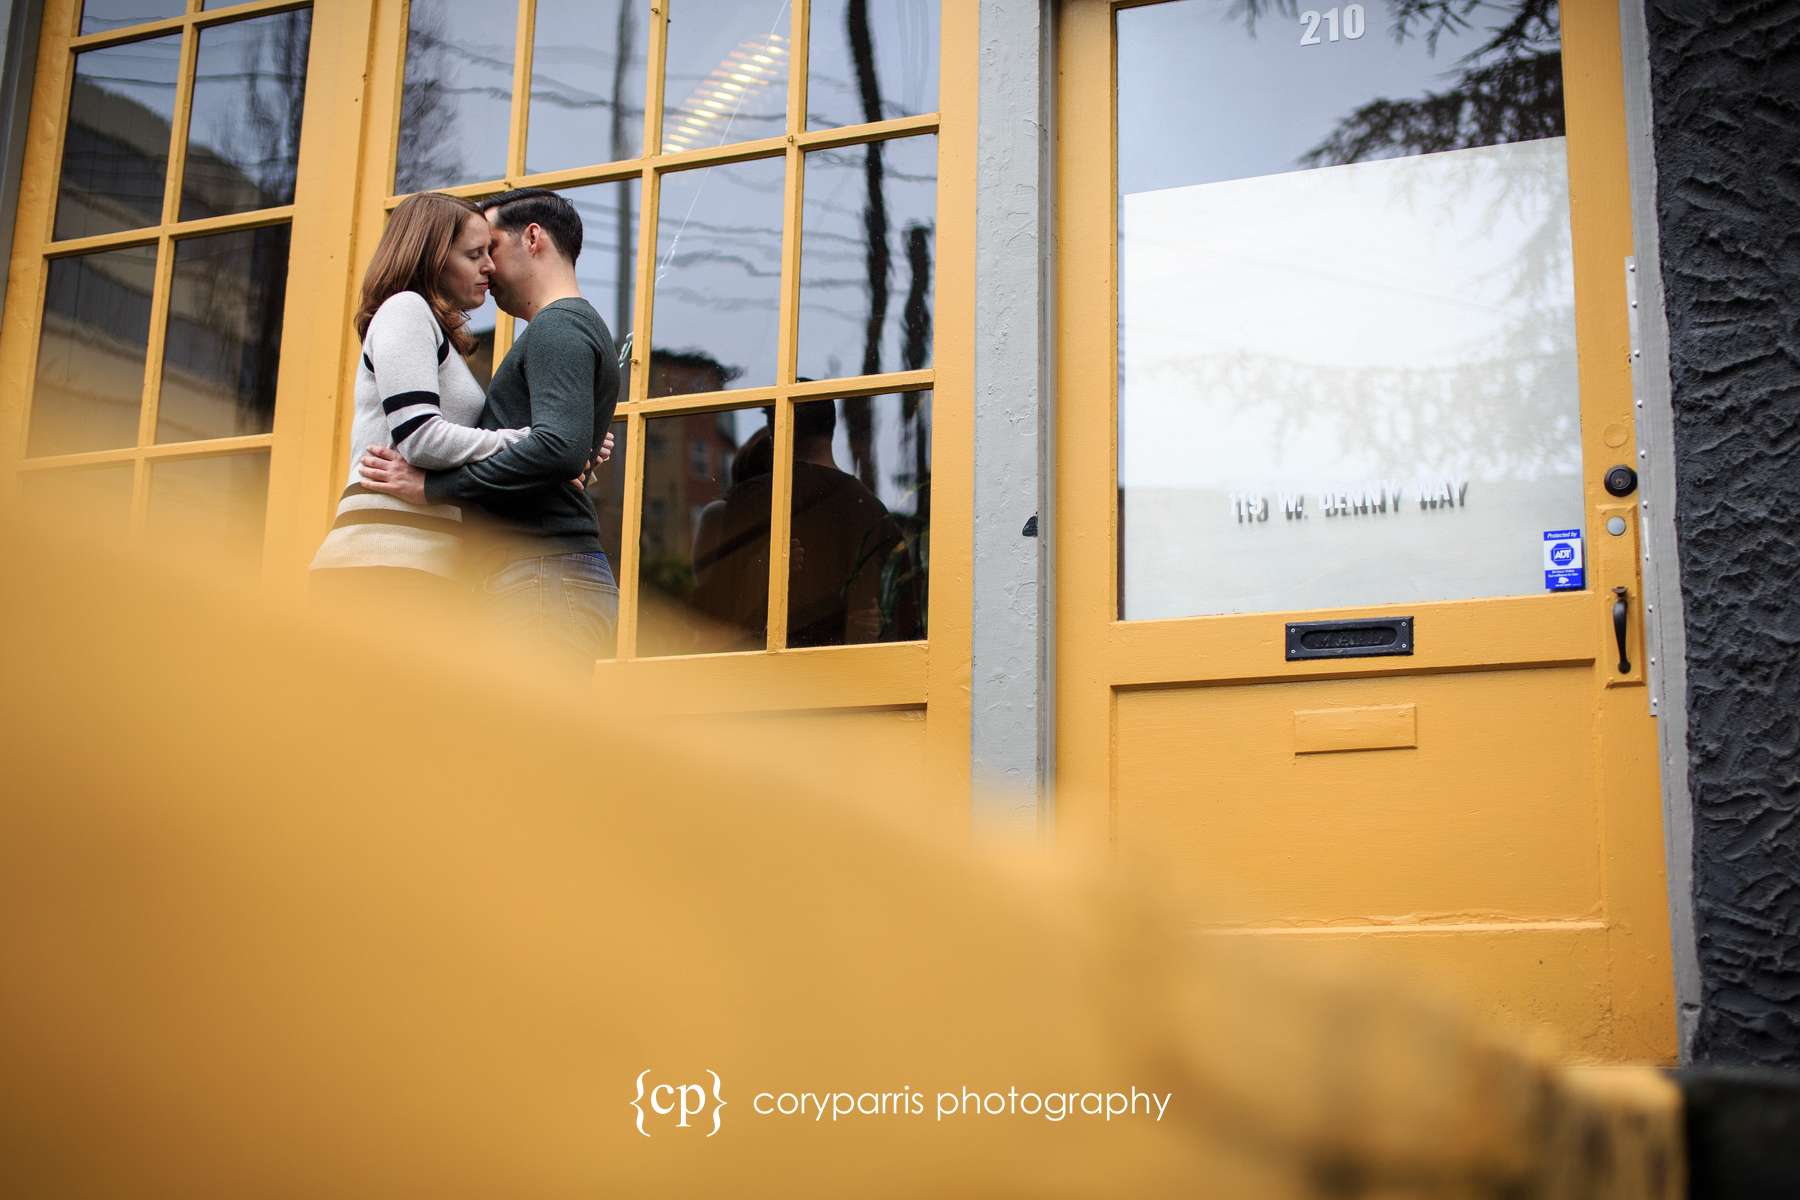 Romantic engagement portrait in Seattle with yellow door